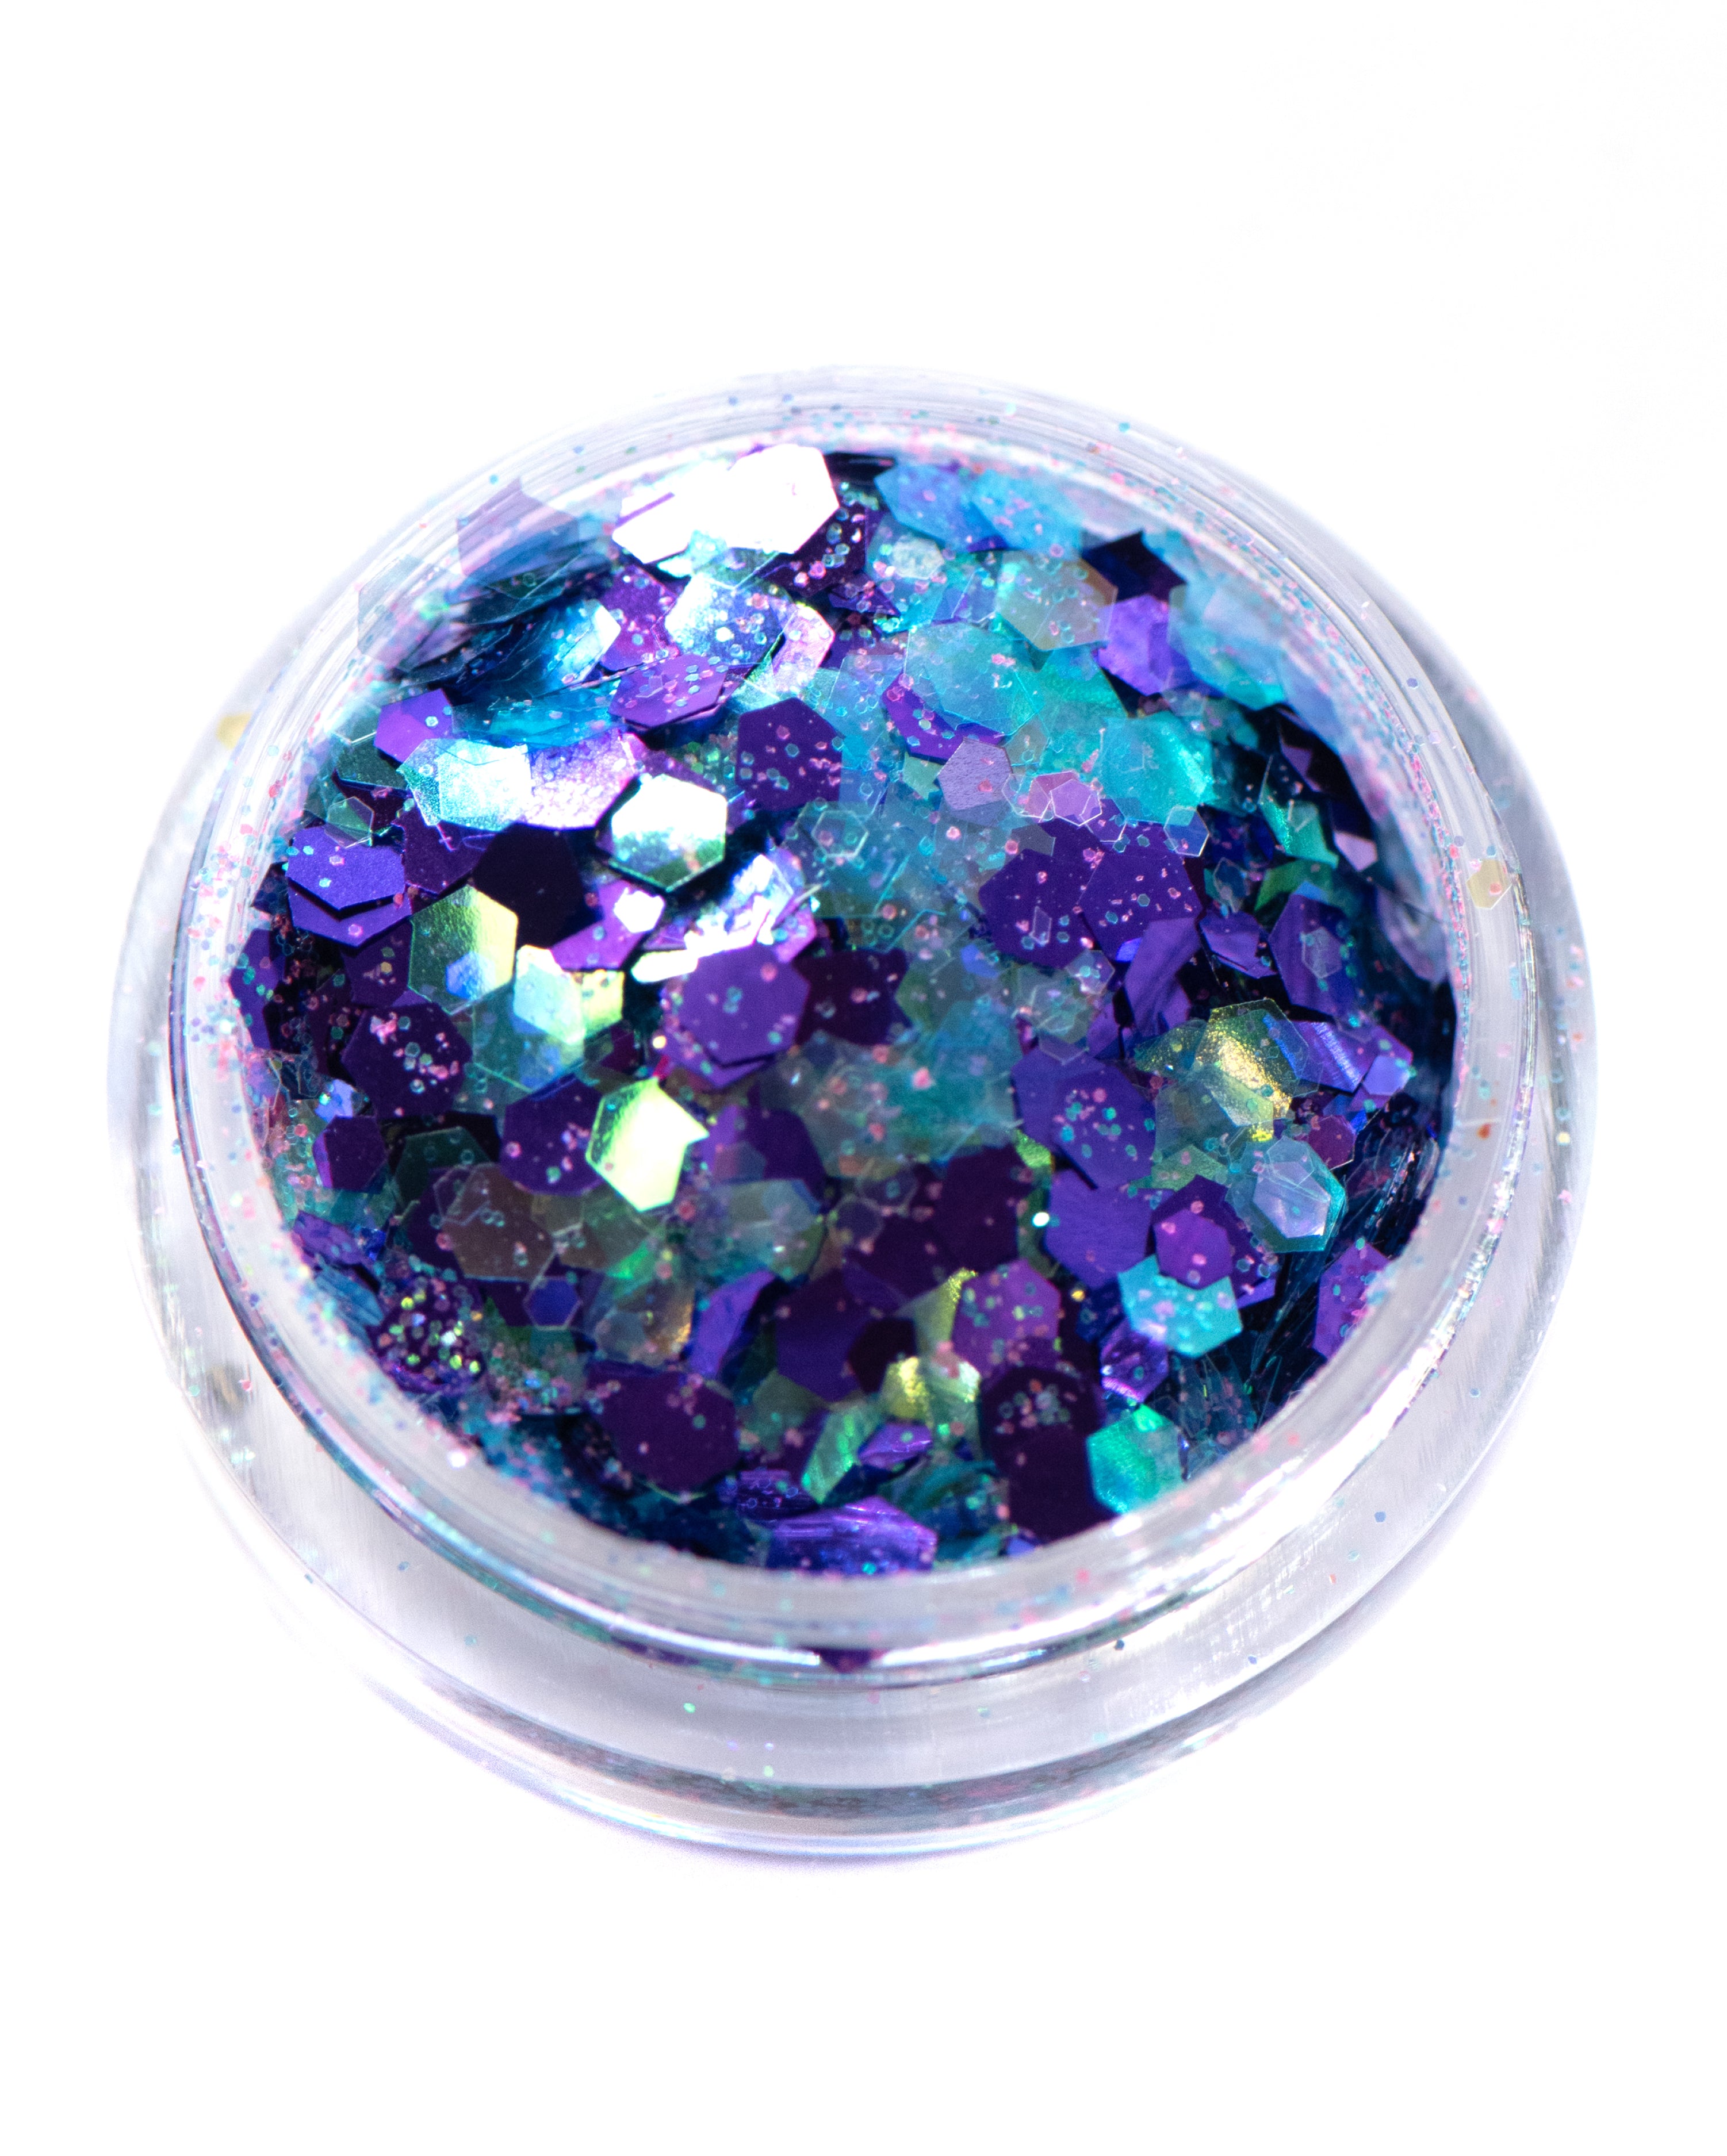 Tea Party - Purple and Aqua Chunky Glitter - Lunautics Chunky Glitter